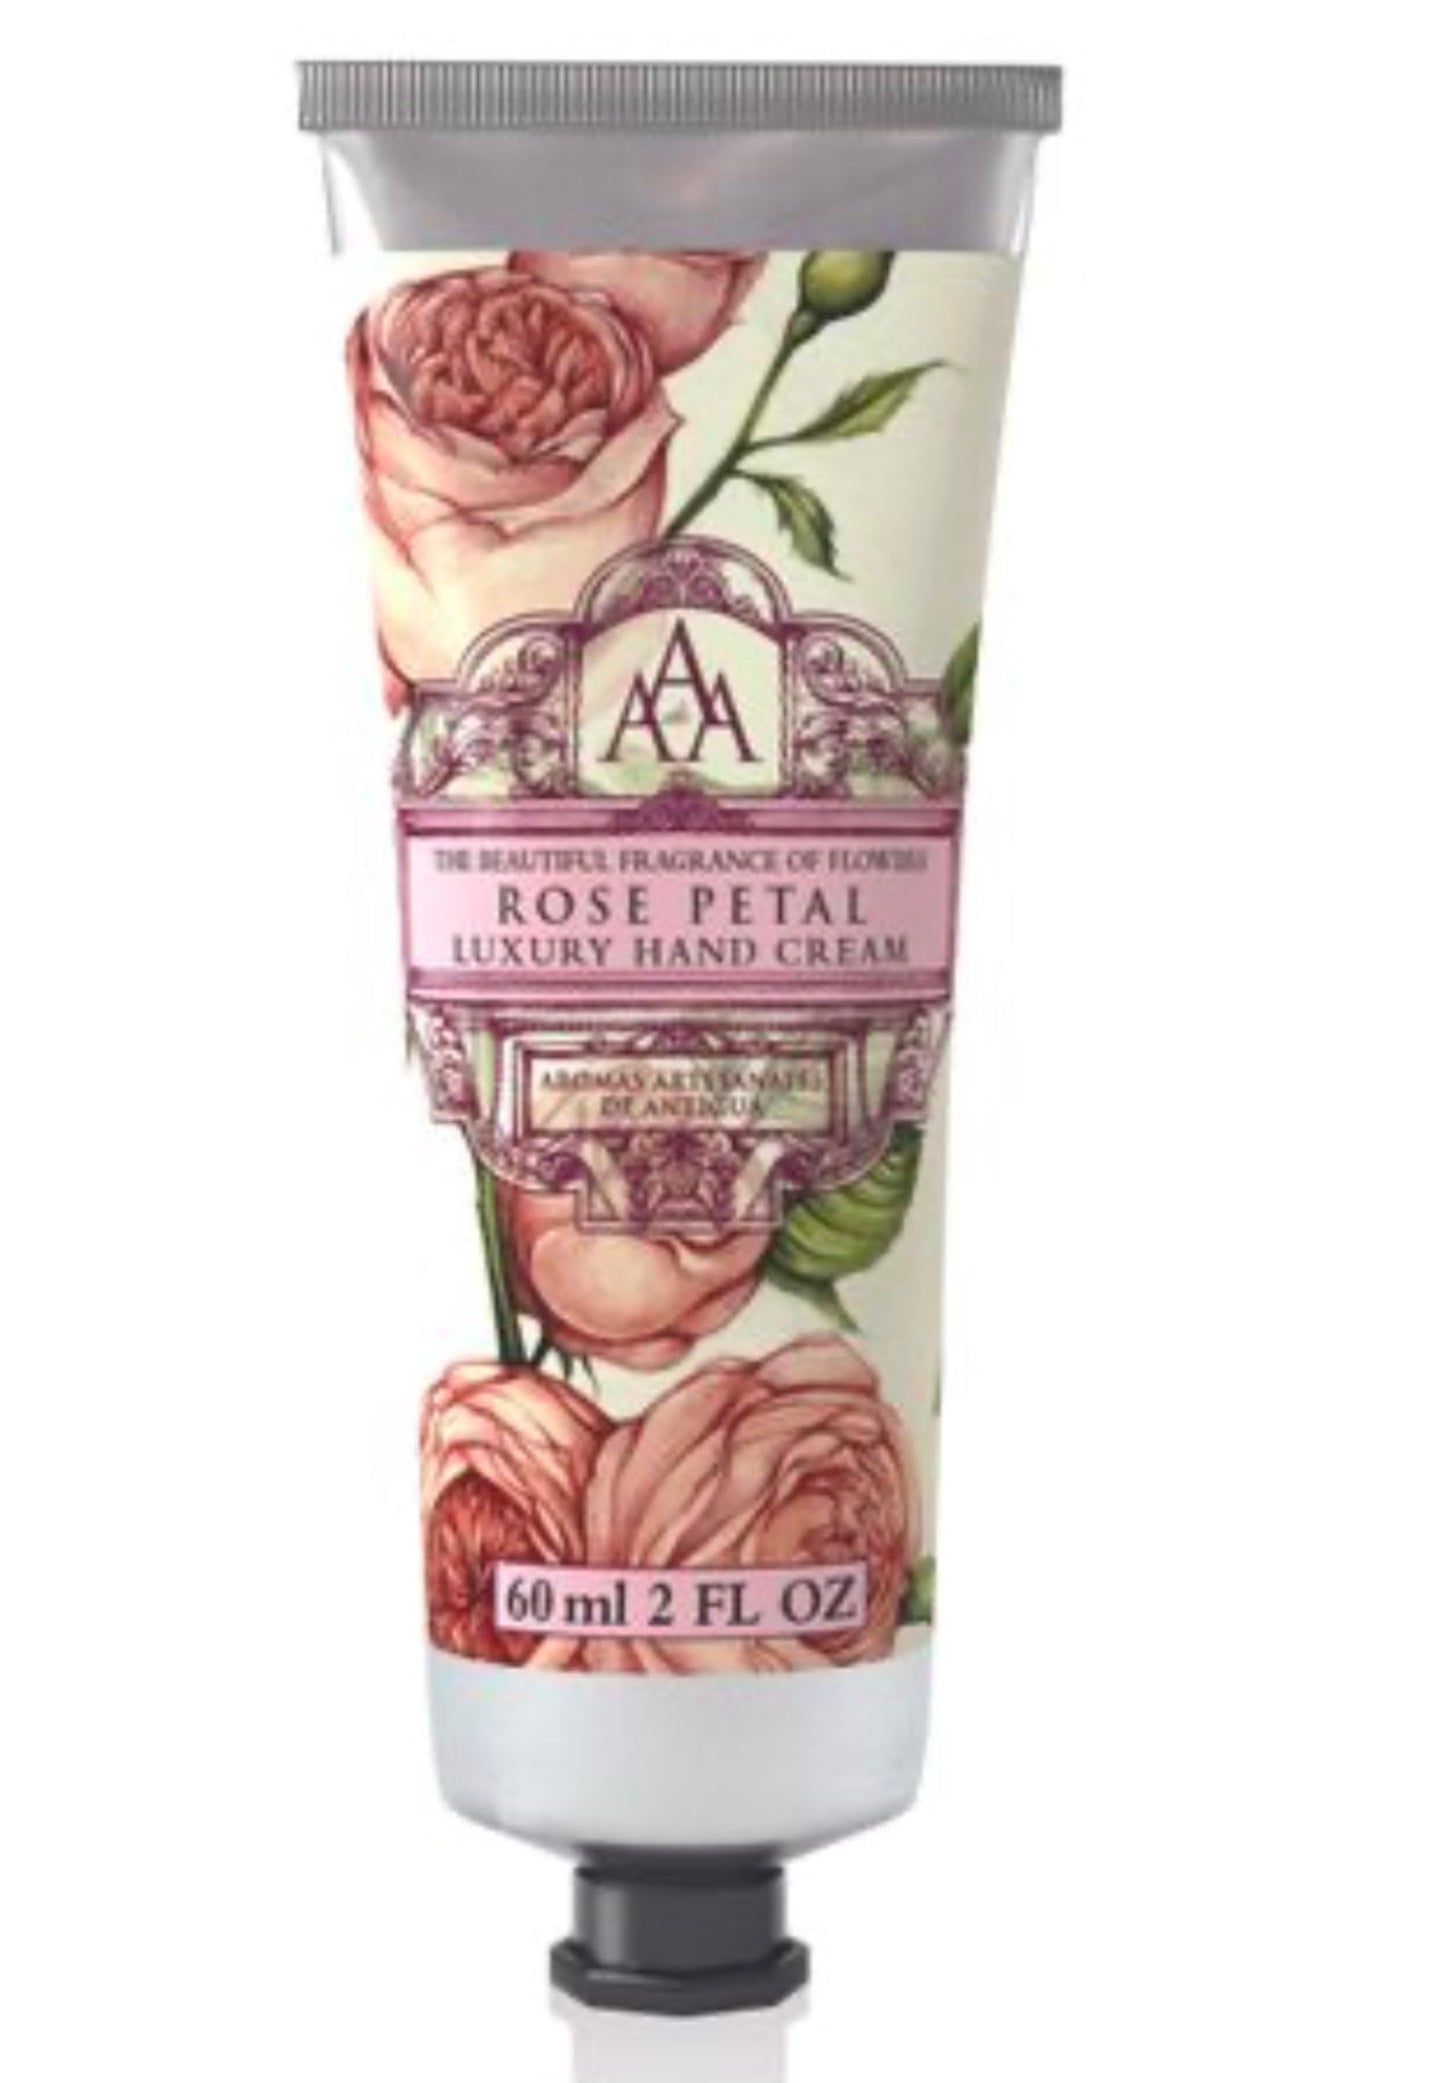 AAA Rose Petal Hand Cream